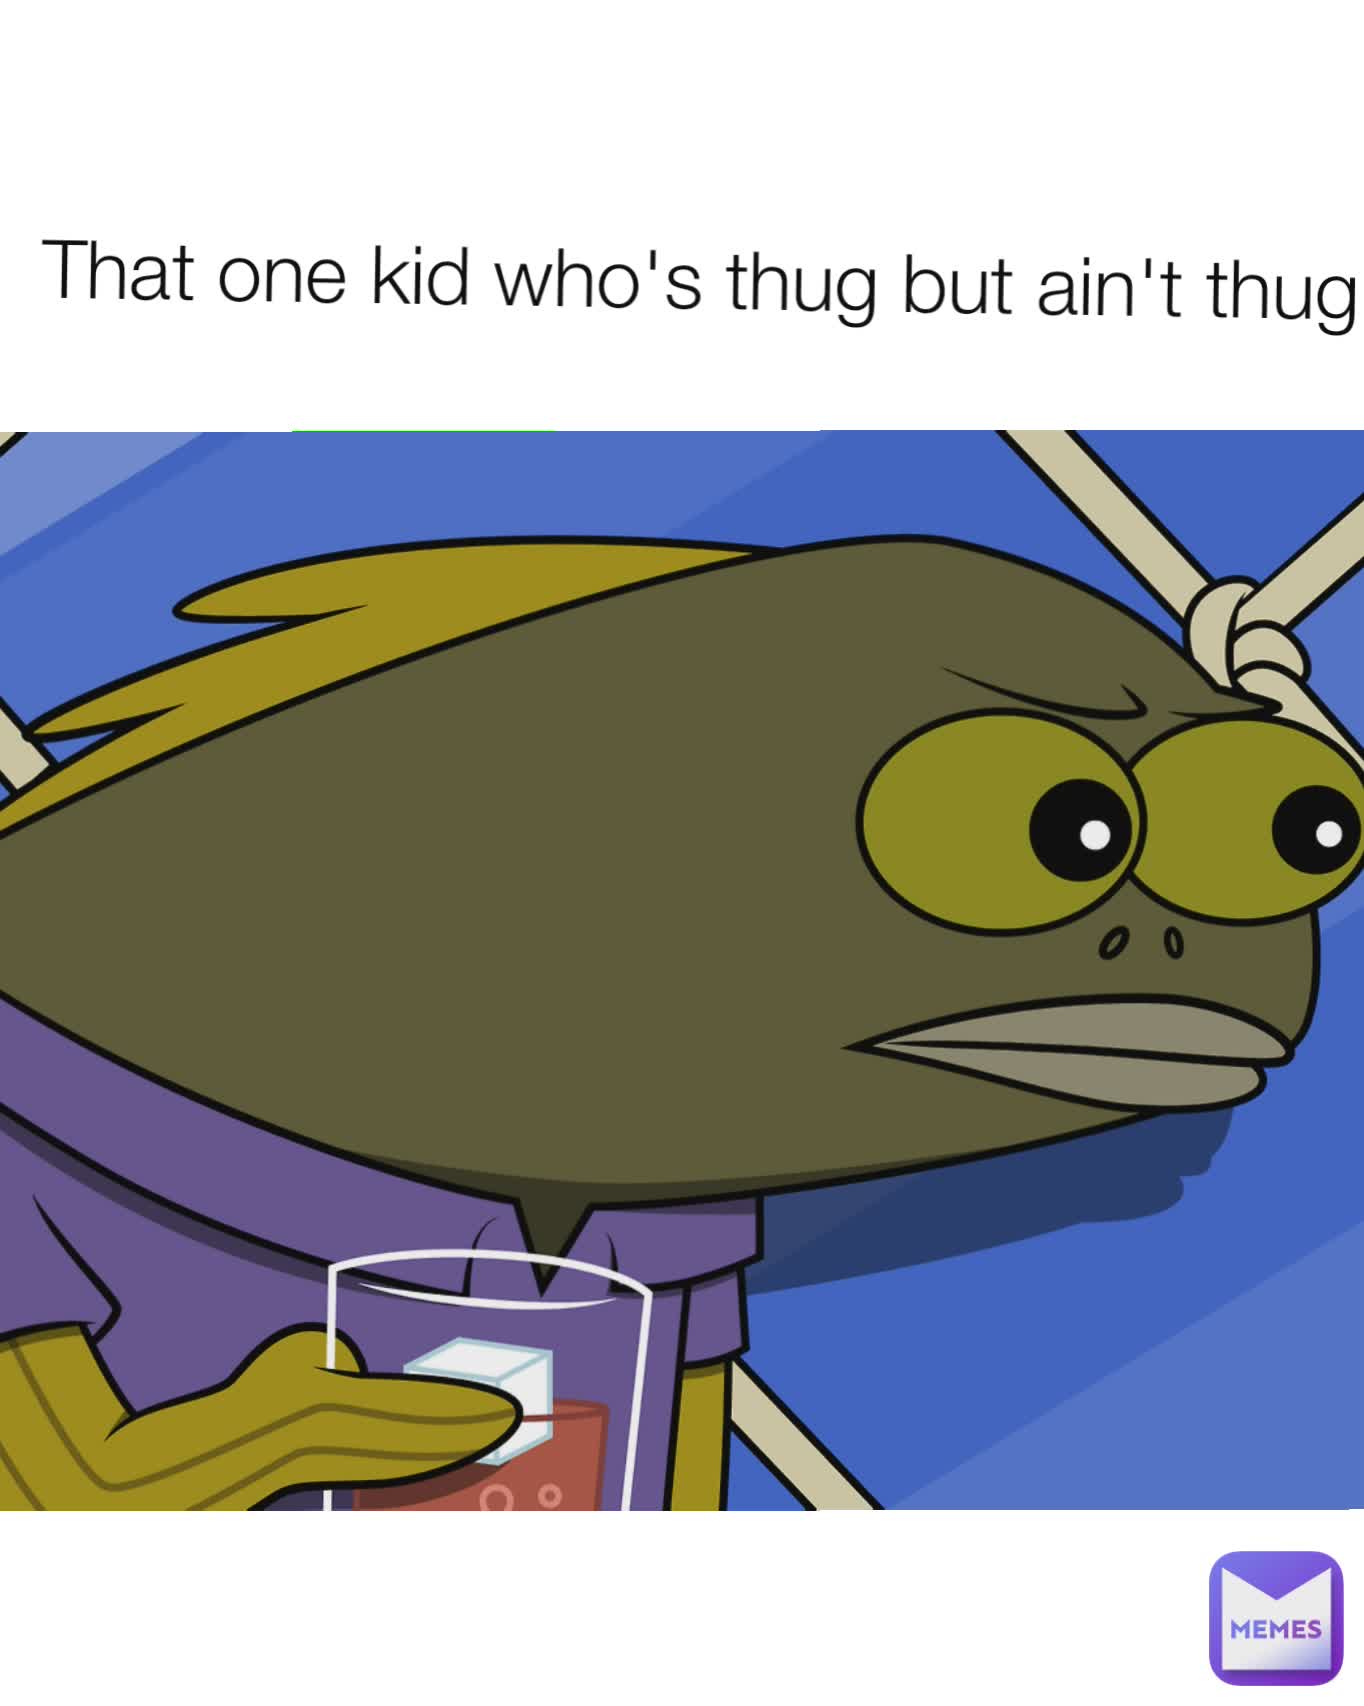 That one kid who's thug but ain't thug